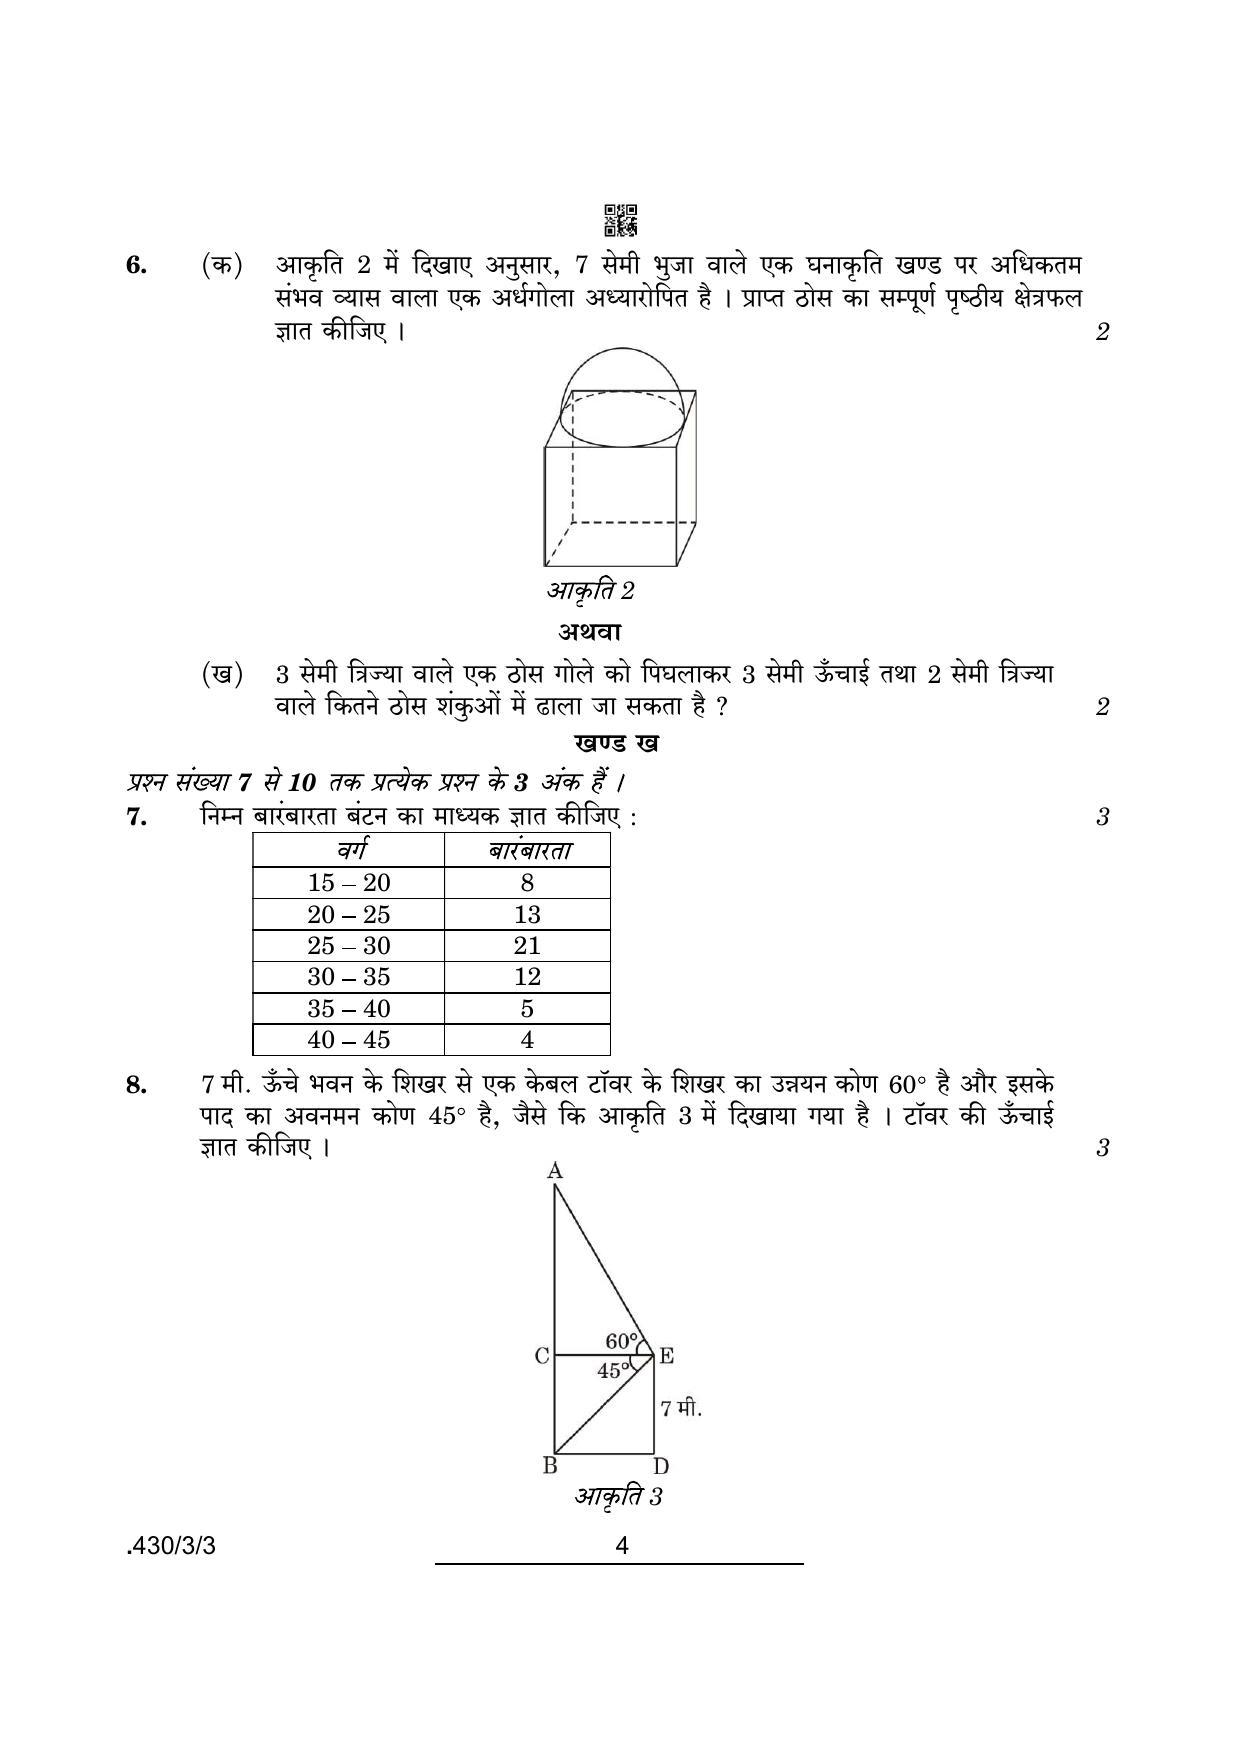 CBSE Class 10 Maths Basic (430/3/3 - SET 3) 2022 Question Paper - Page 4